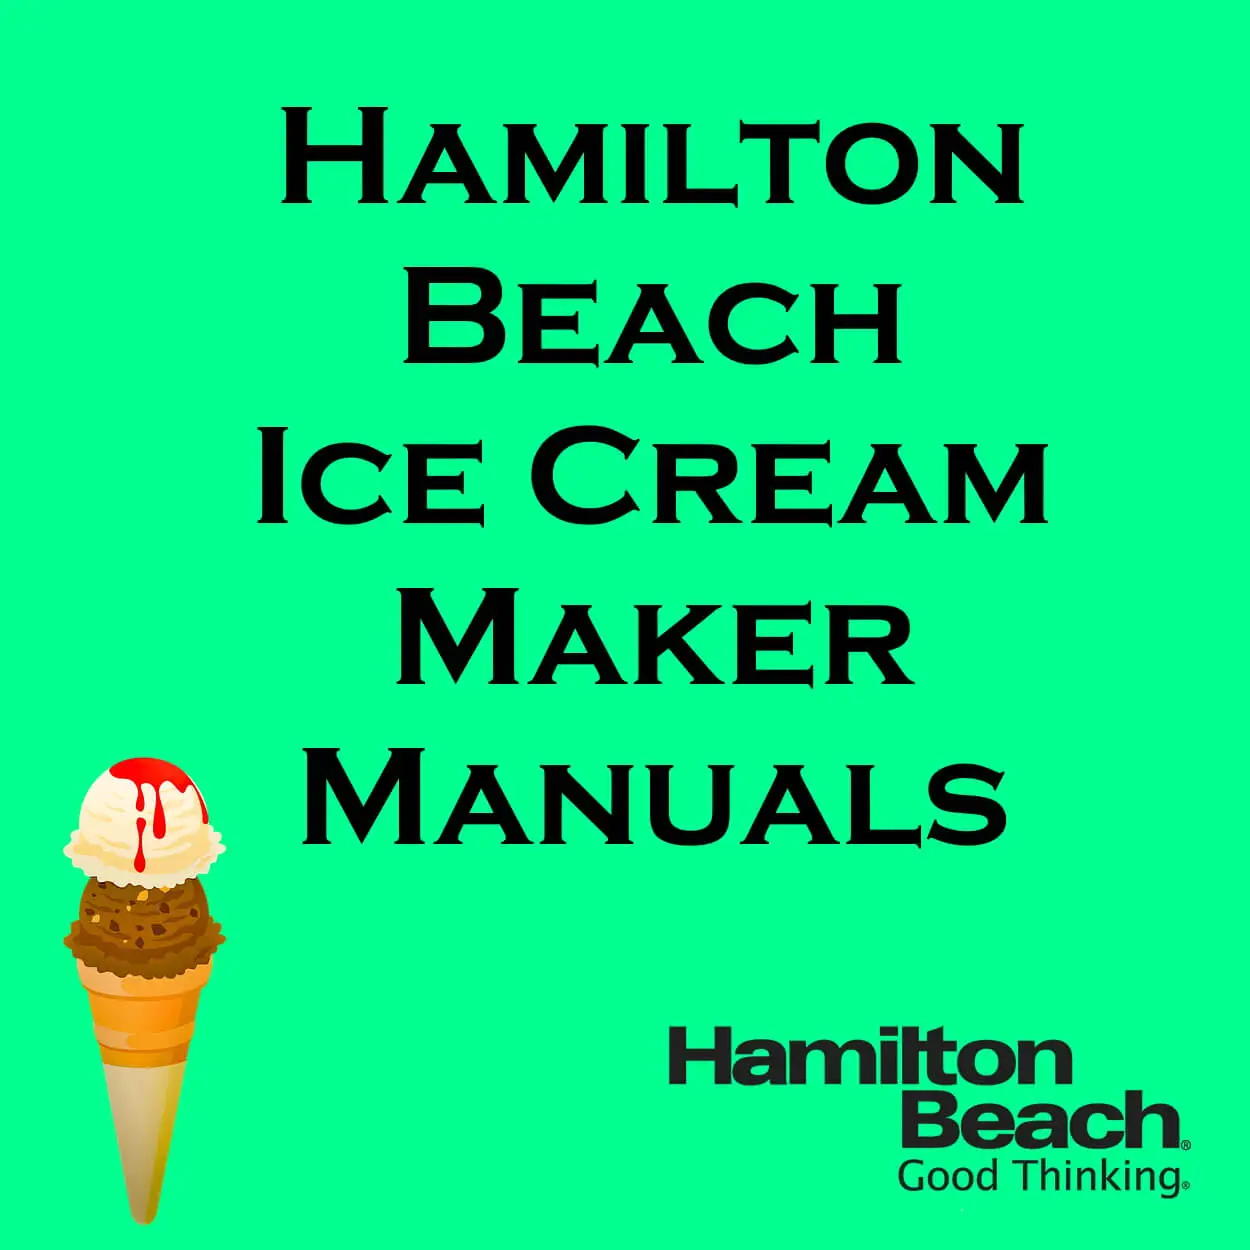 Hamilton Beach Ice Cream Maker Manual